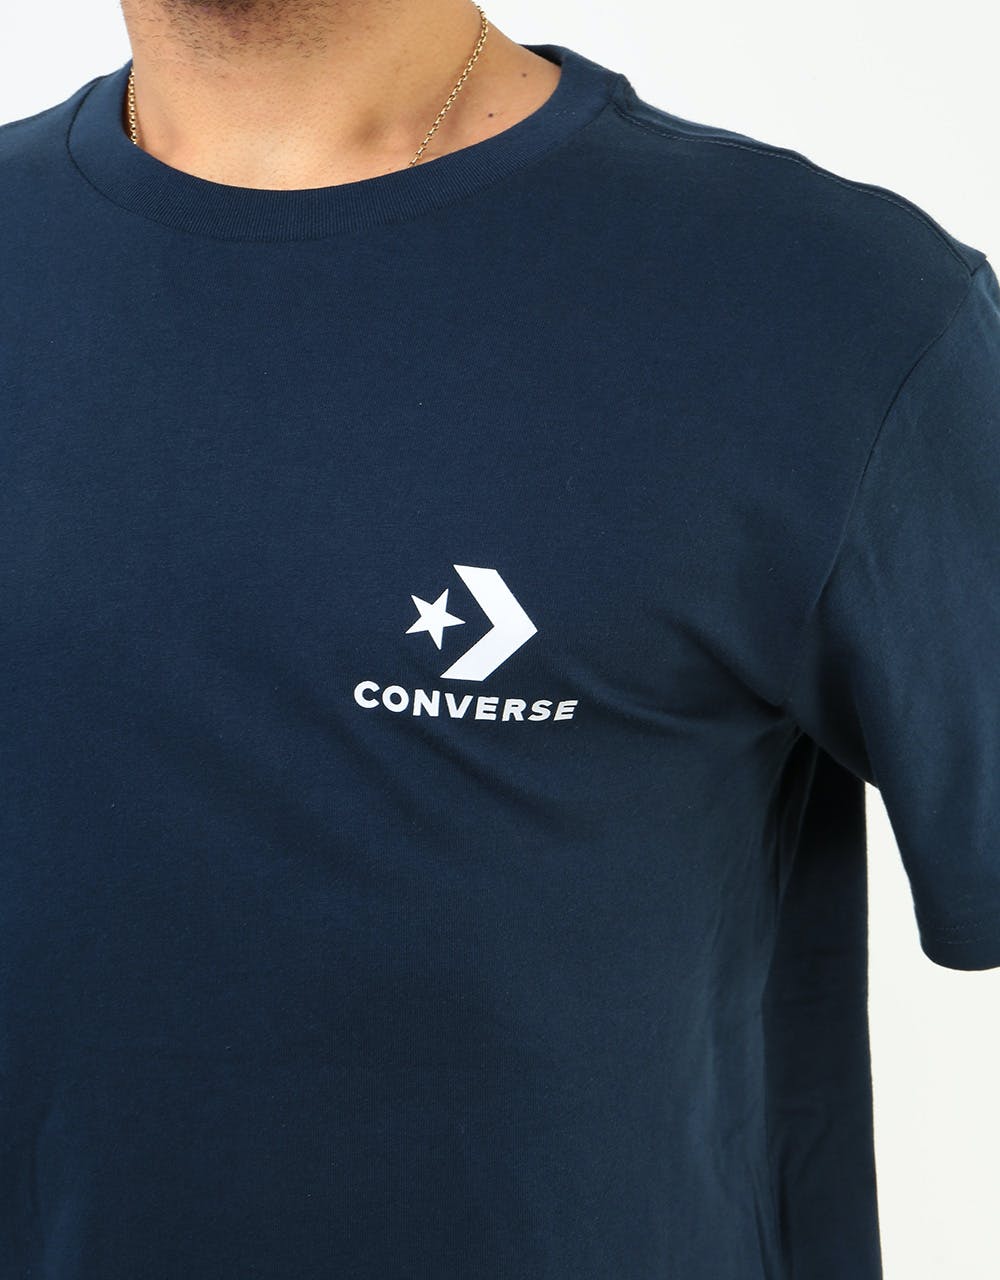 Converse Star Chevron Left Chest T-Shirt - Obsidian